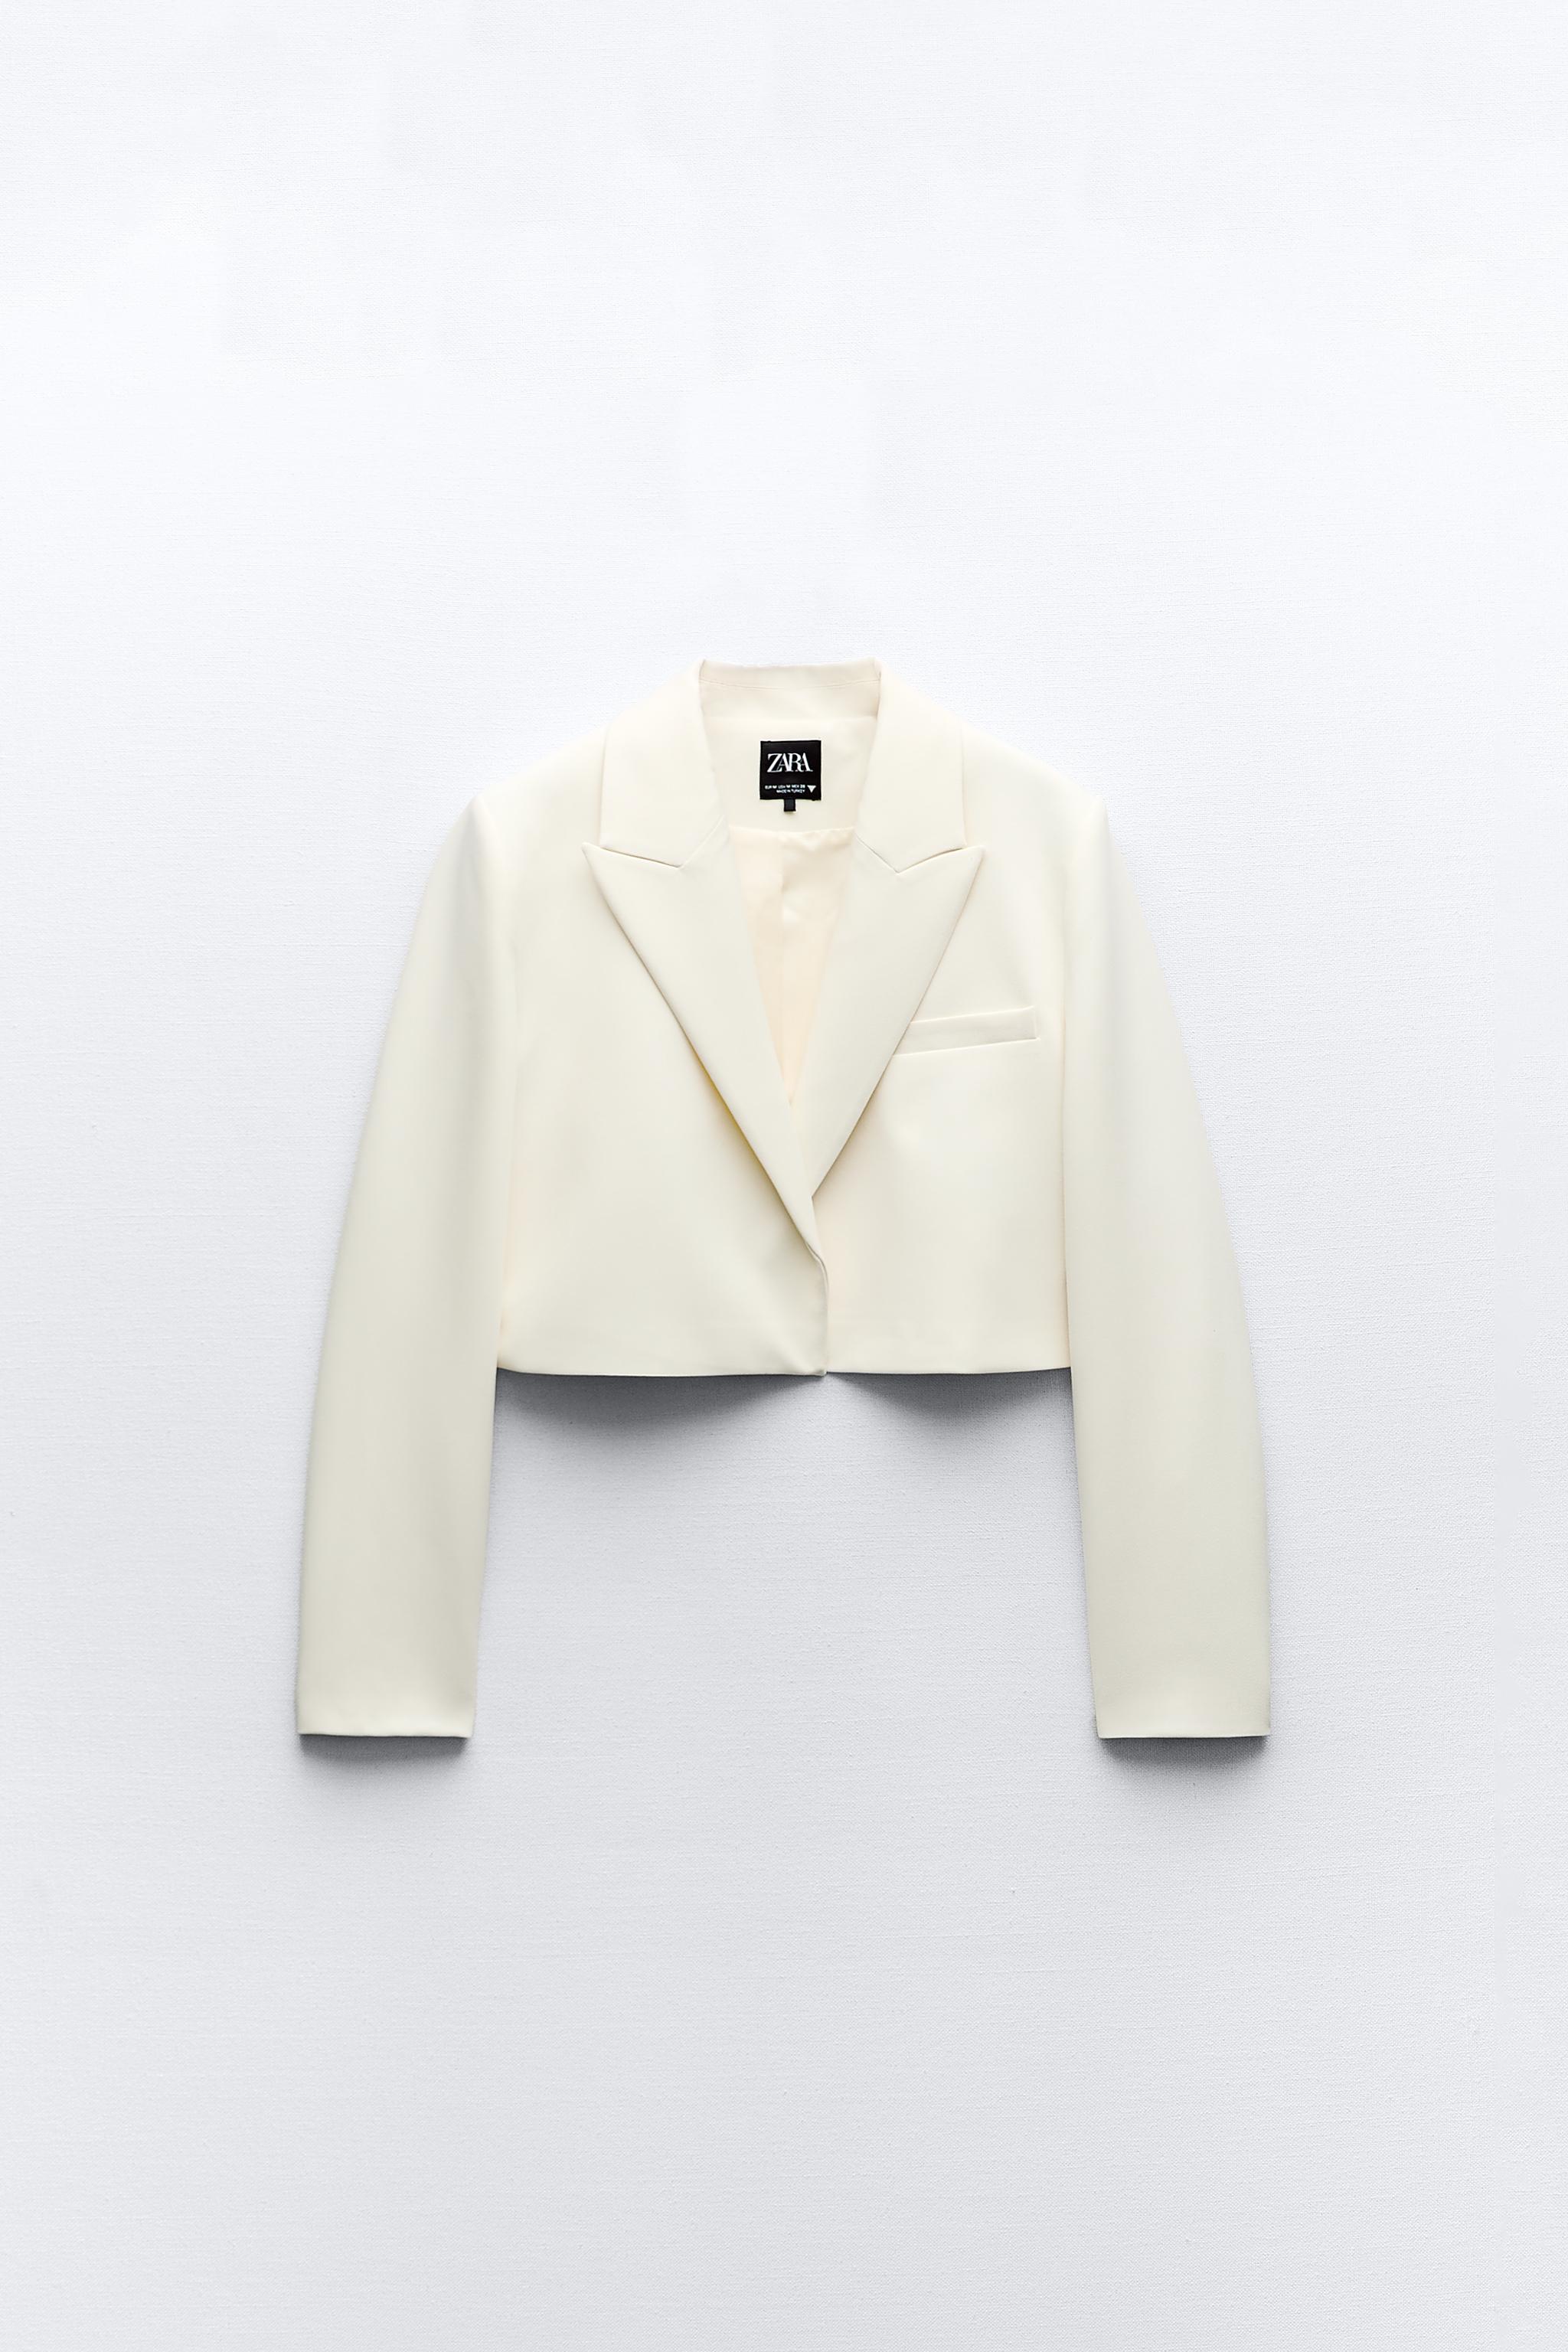 Zara Cropped Corset in Oyster White, Women's Fashion, Tops